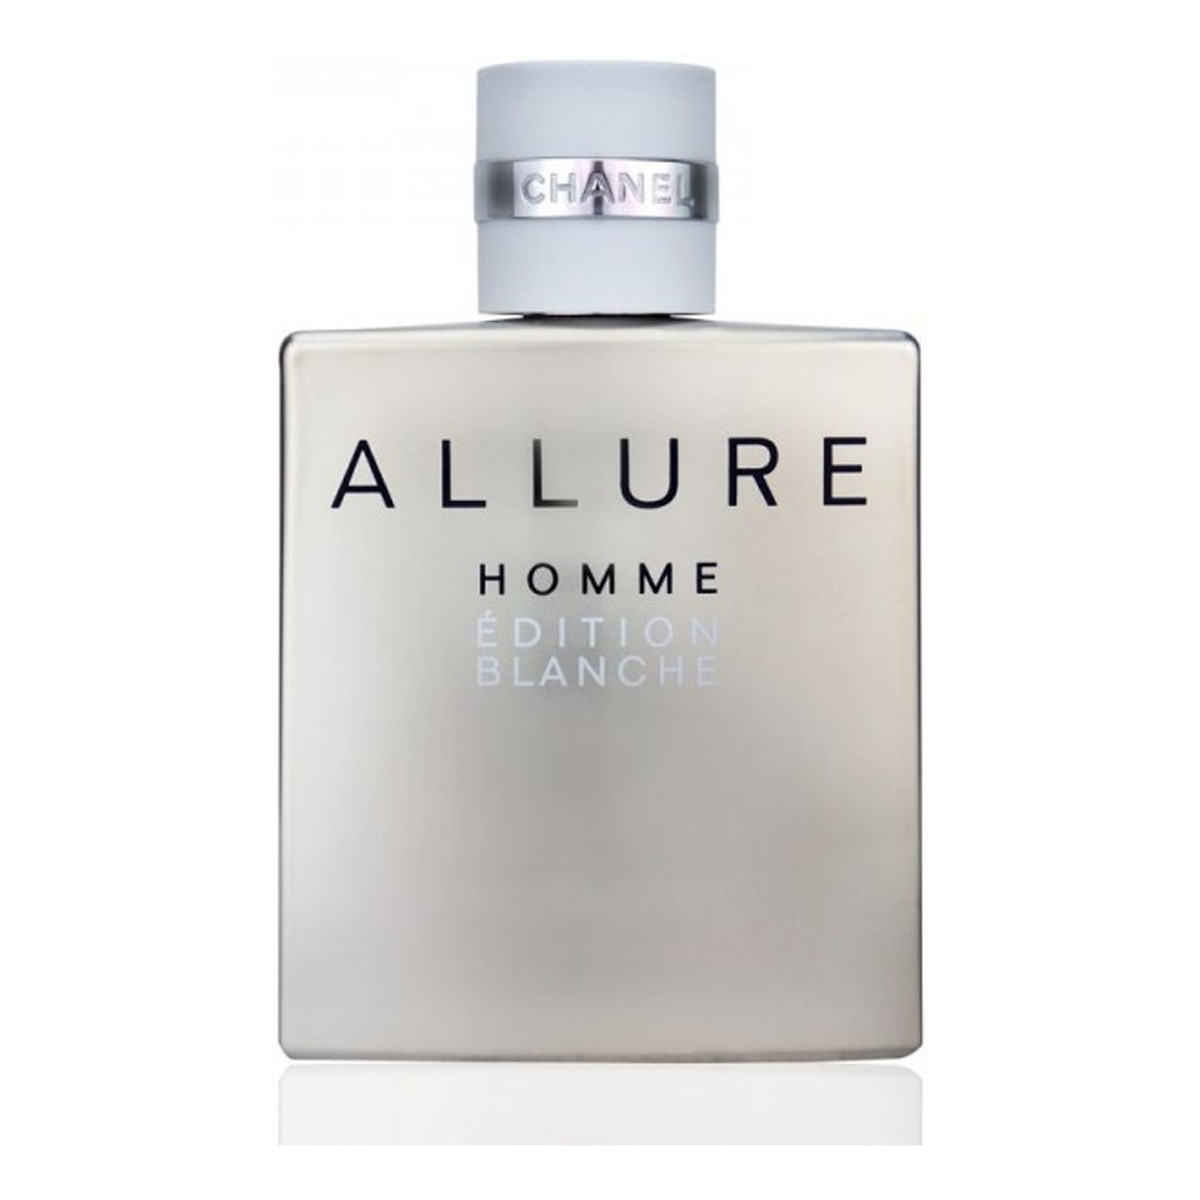 Chanel Allure Homme Edition Blanche woda perfumowana 50ml